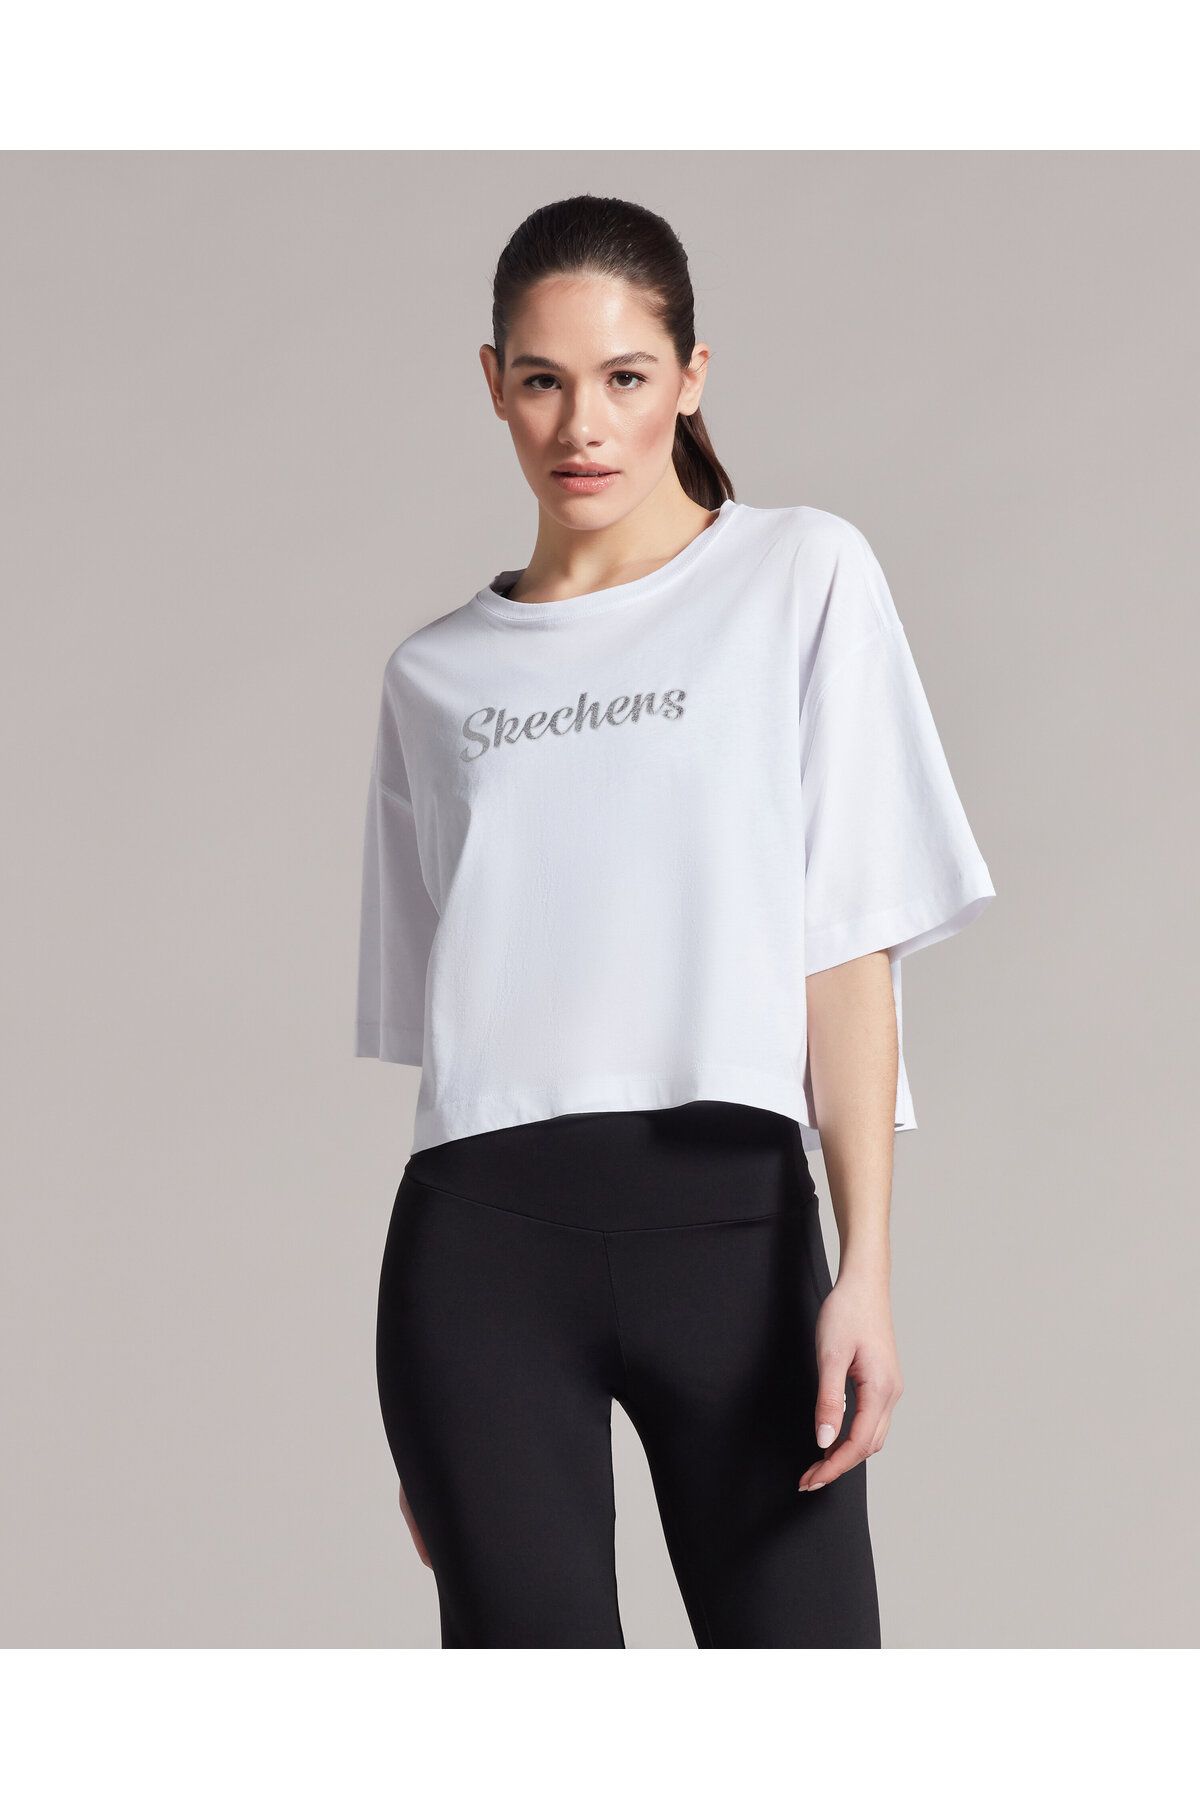 Skechers W Graphic Tee Crew Neck T-shirt Kadın Beyaz Tshirt S231254-100